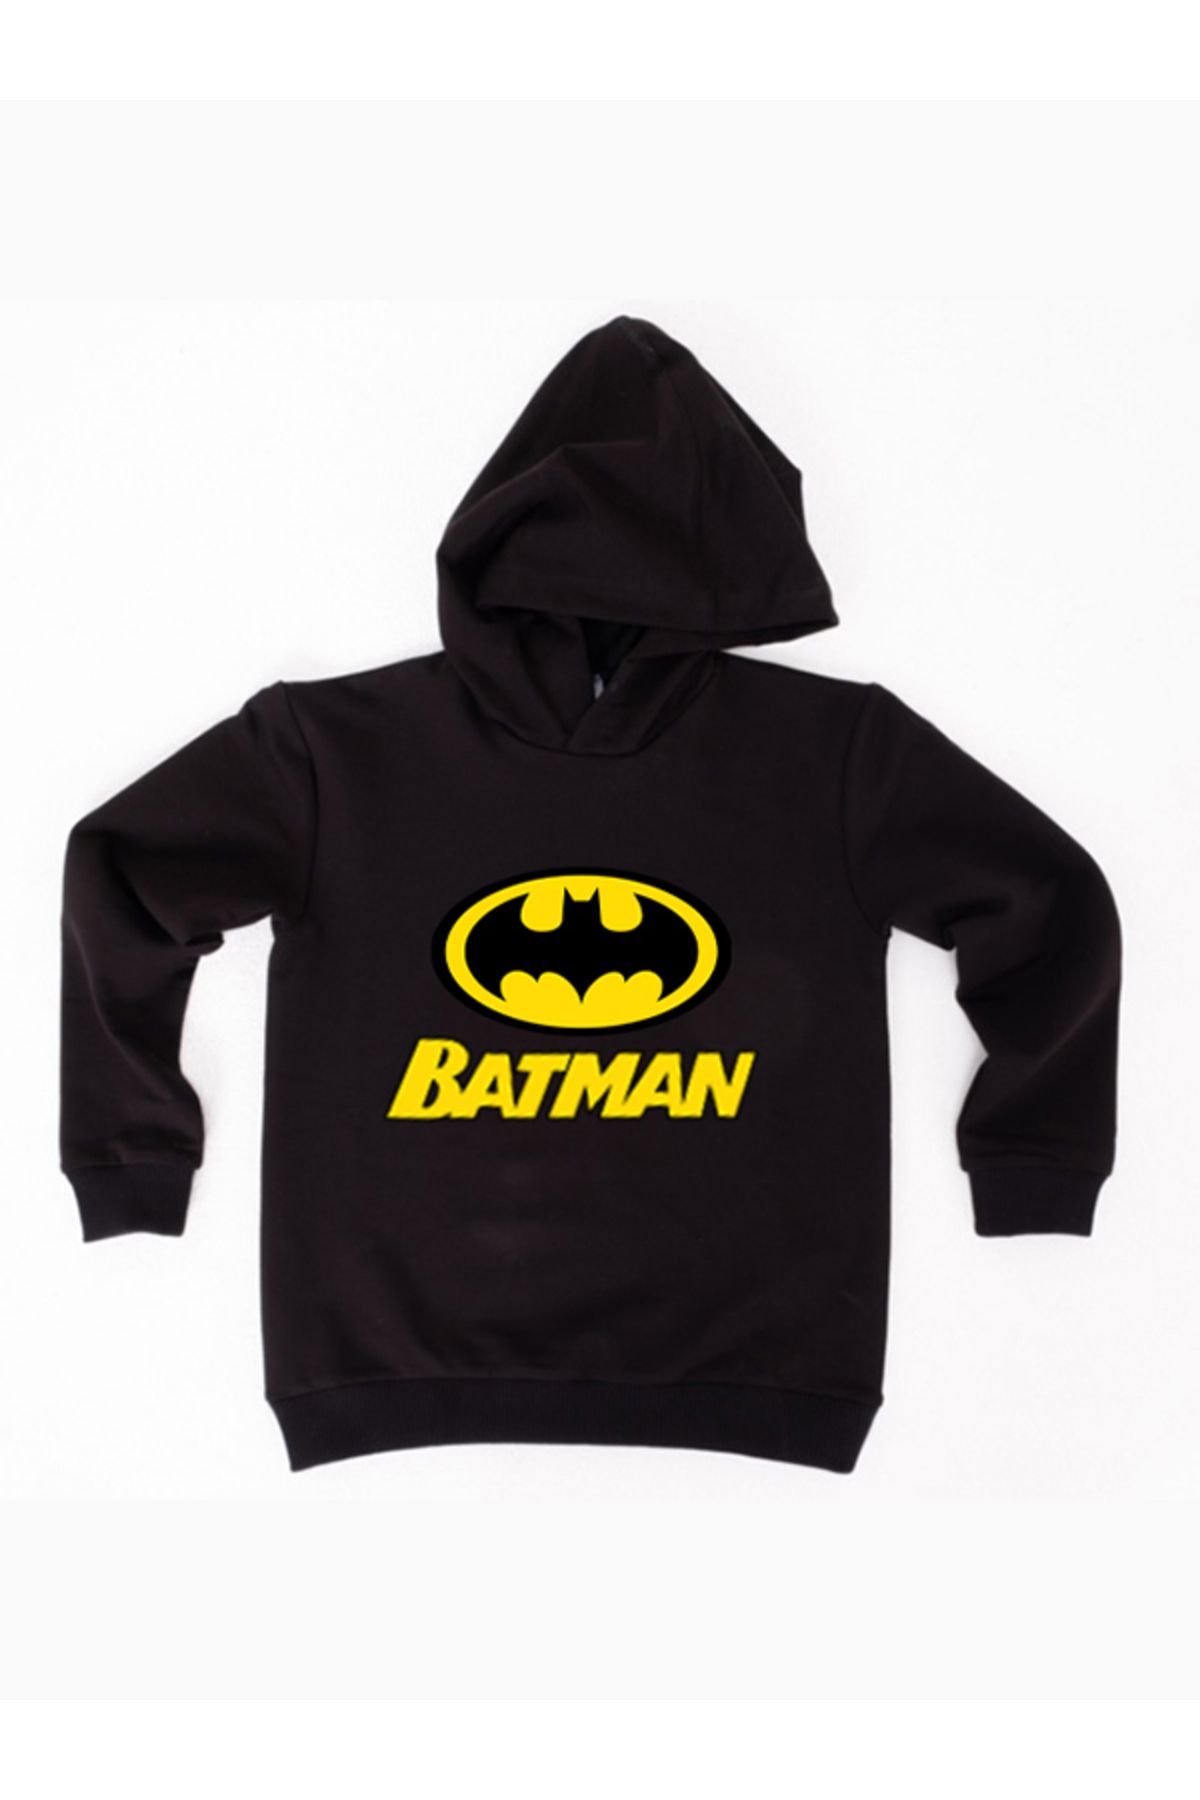 Batman Printed Hooded Cotton Fabric Kids Sweatshirt - Trendyol